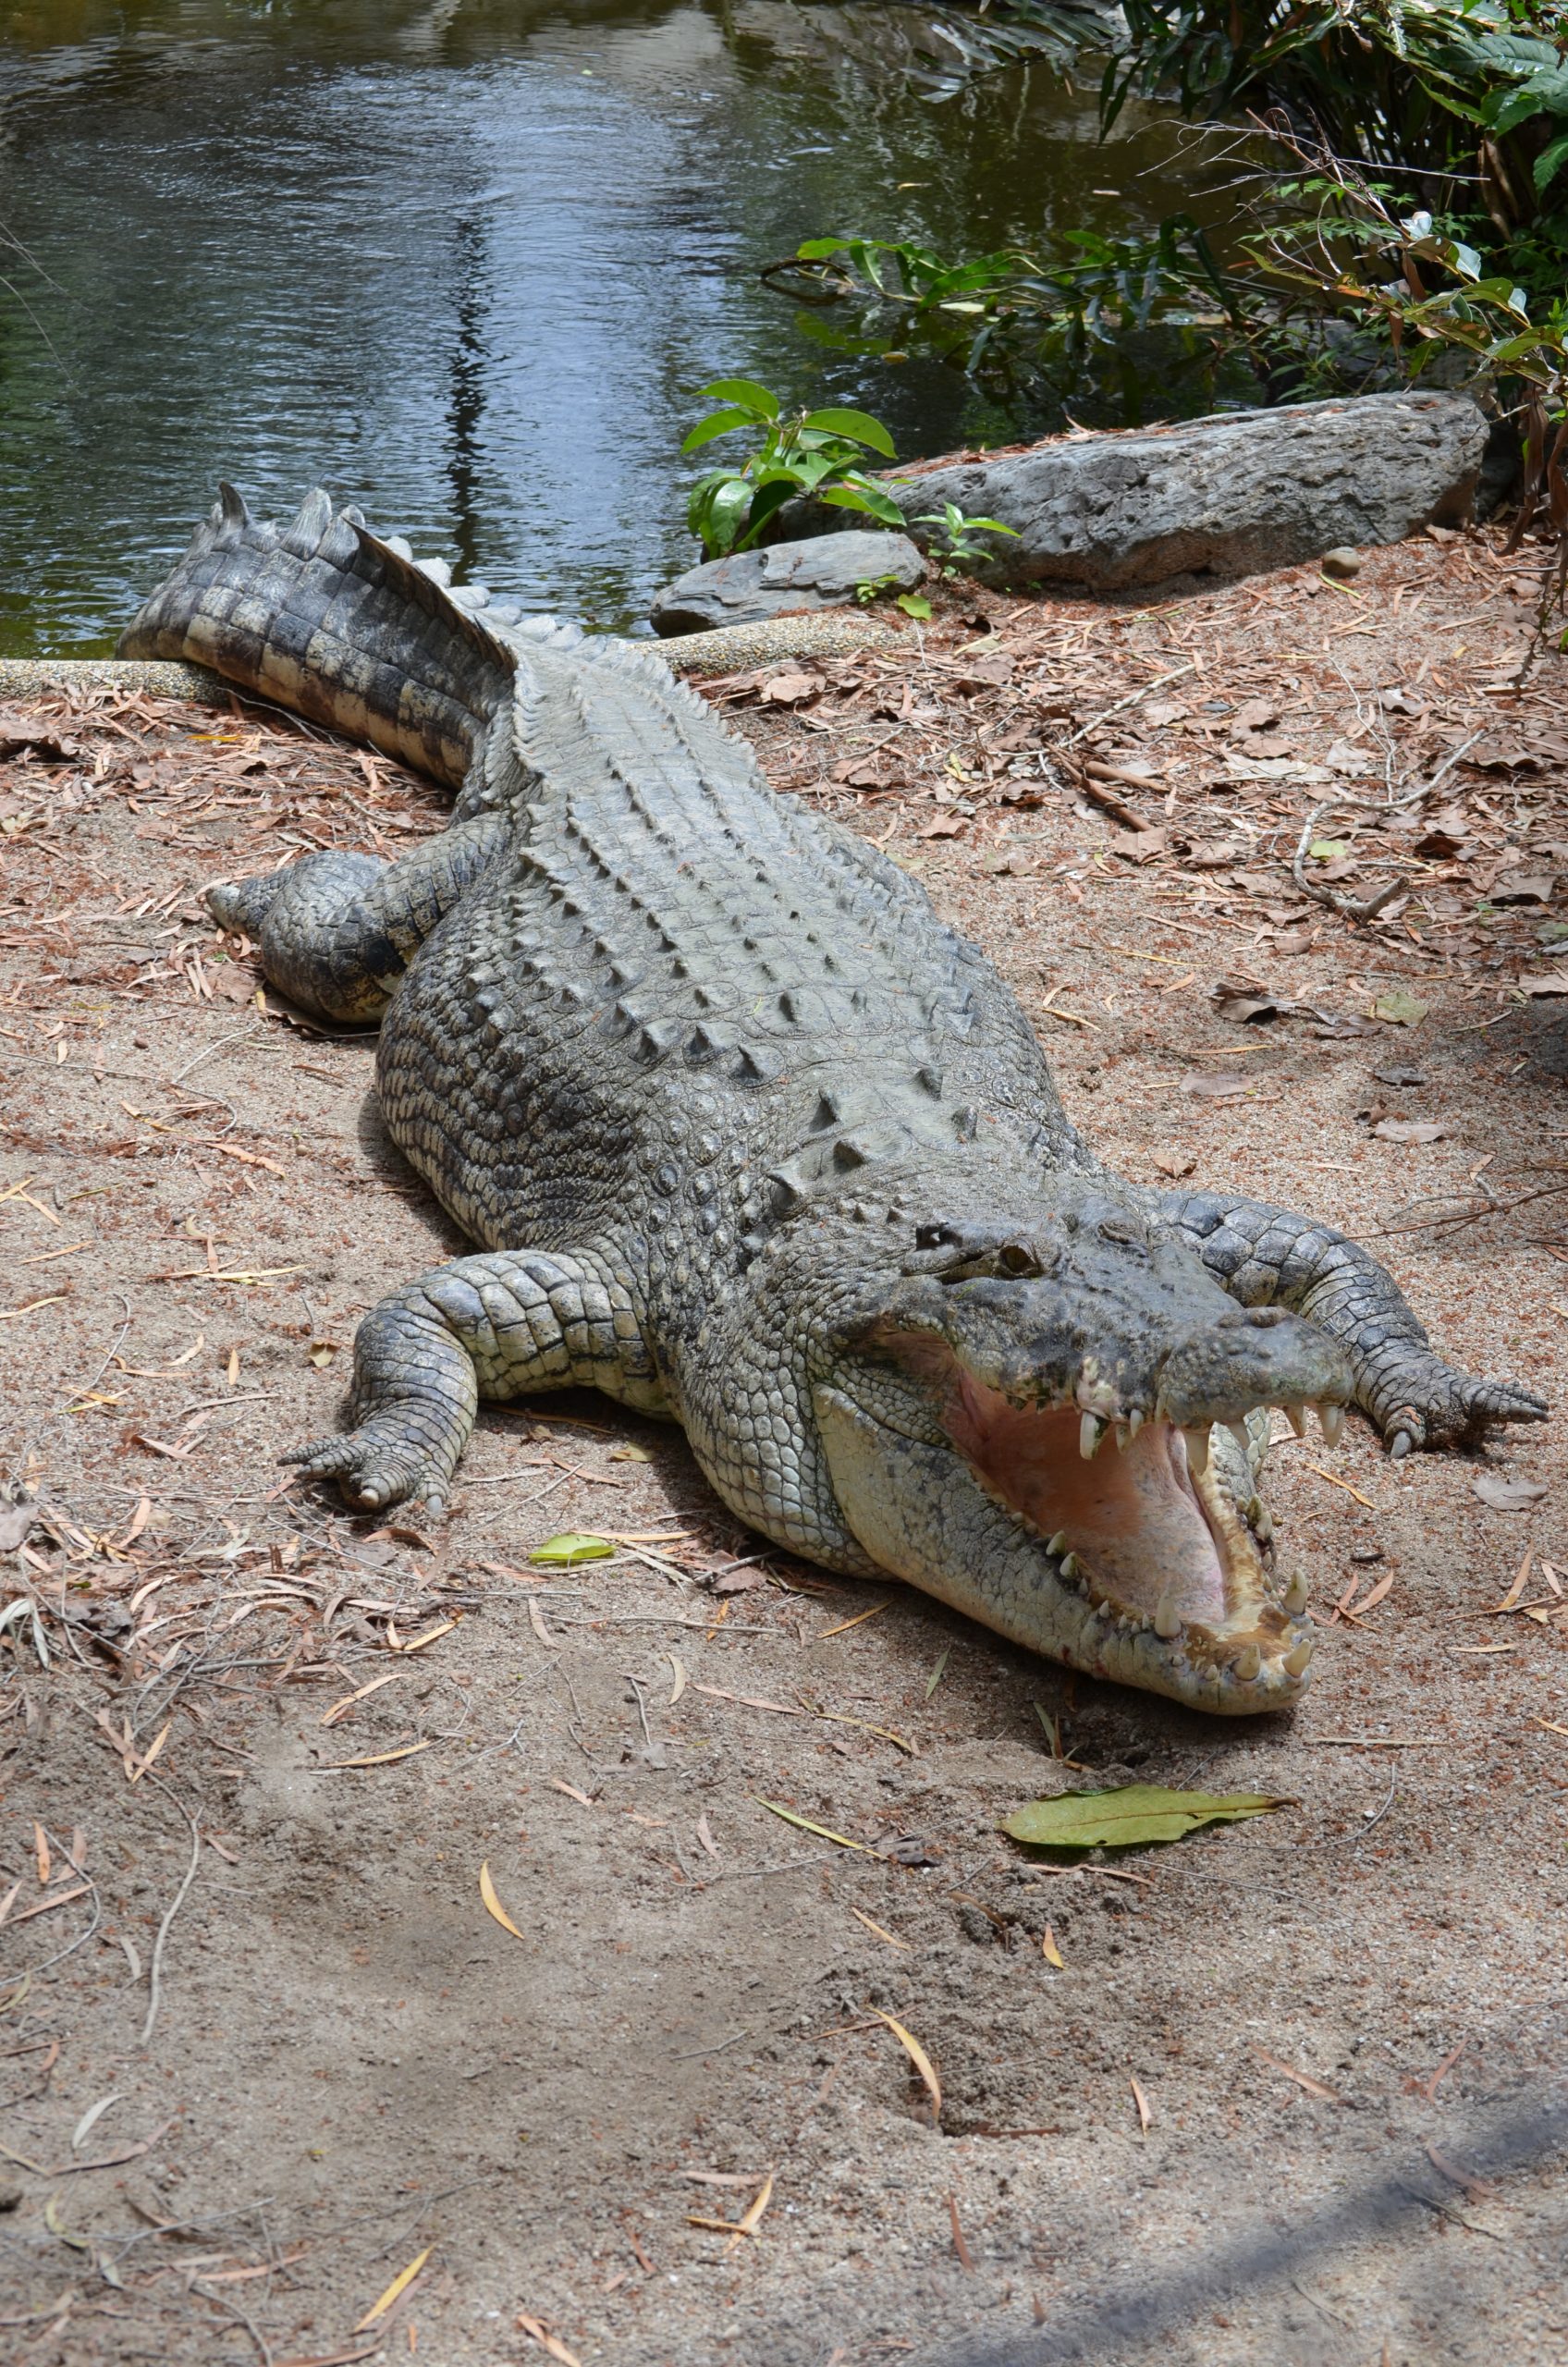 saltwater crocodile at wildlife habitat in port douglas